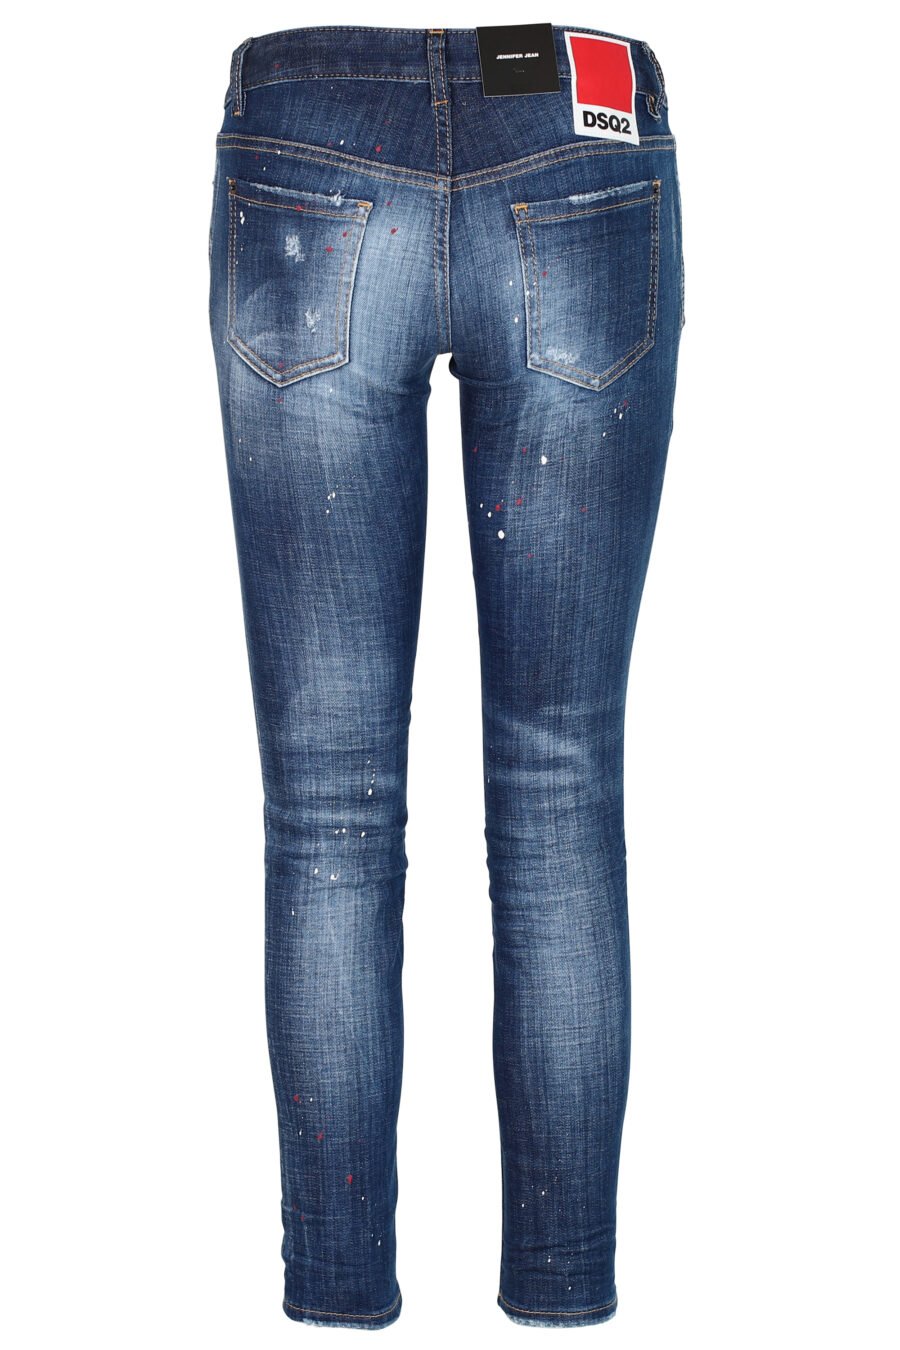 Jeans "Jennifer Jean" blue with splash paint and worn effect - 8052134937259 3